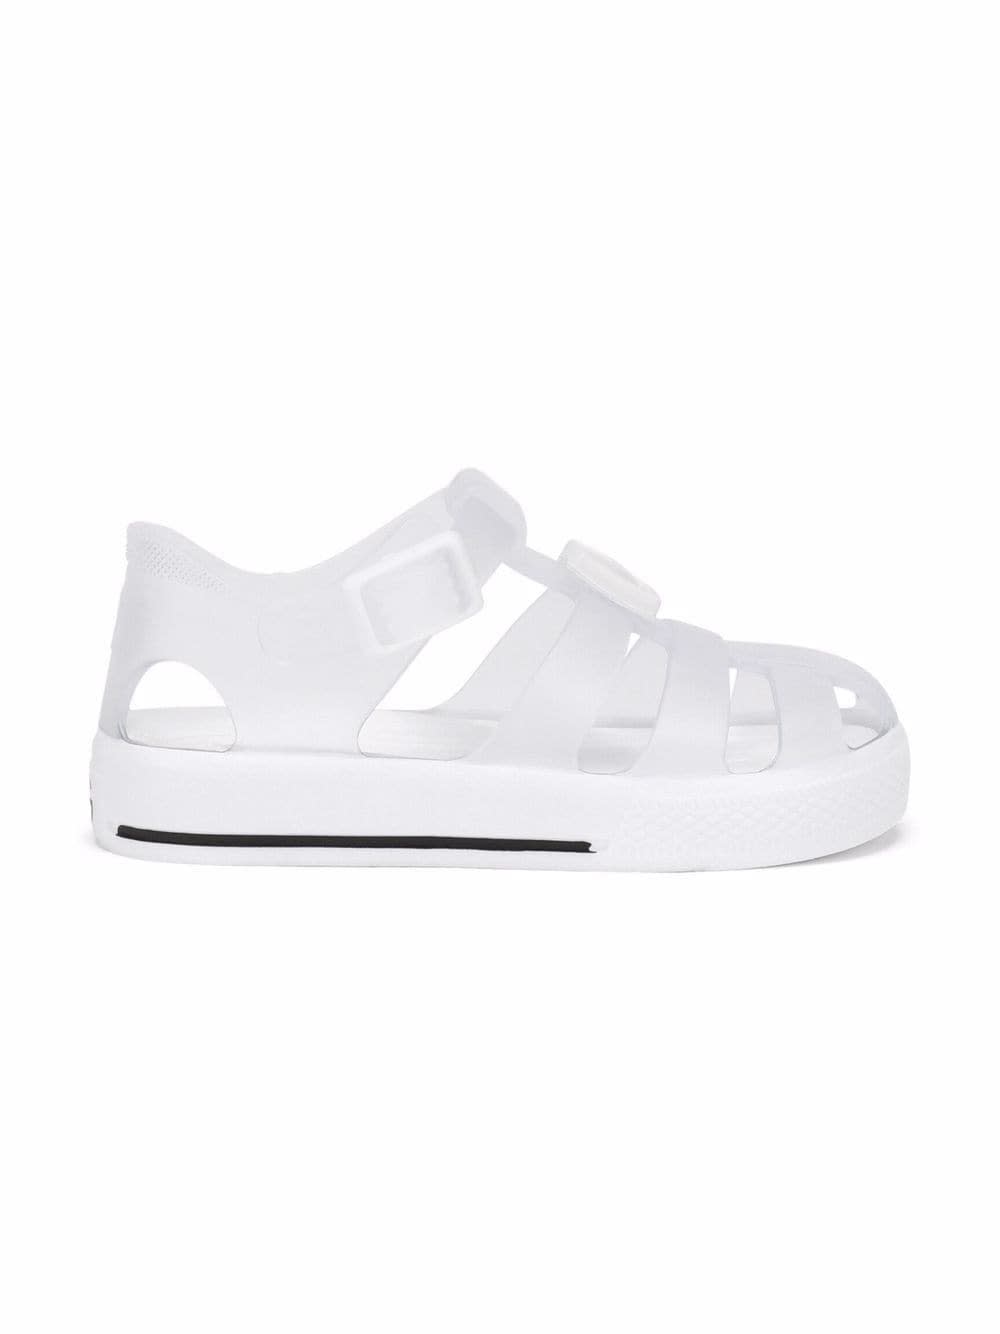 Dolce & Gabbana Kids' White Rubber Sandals